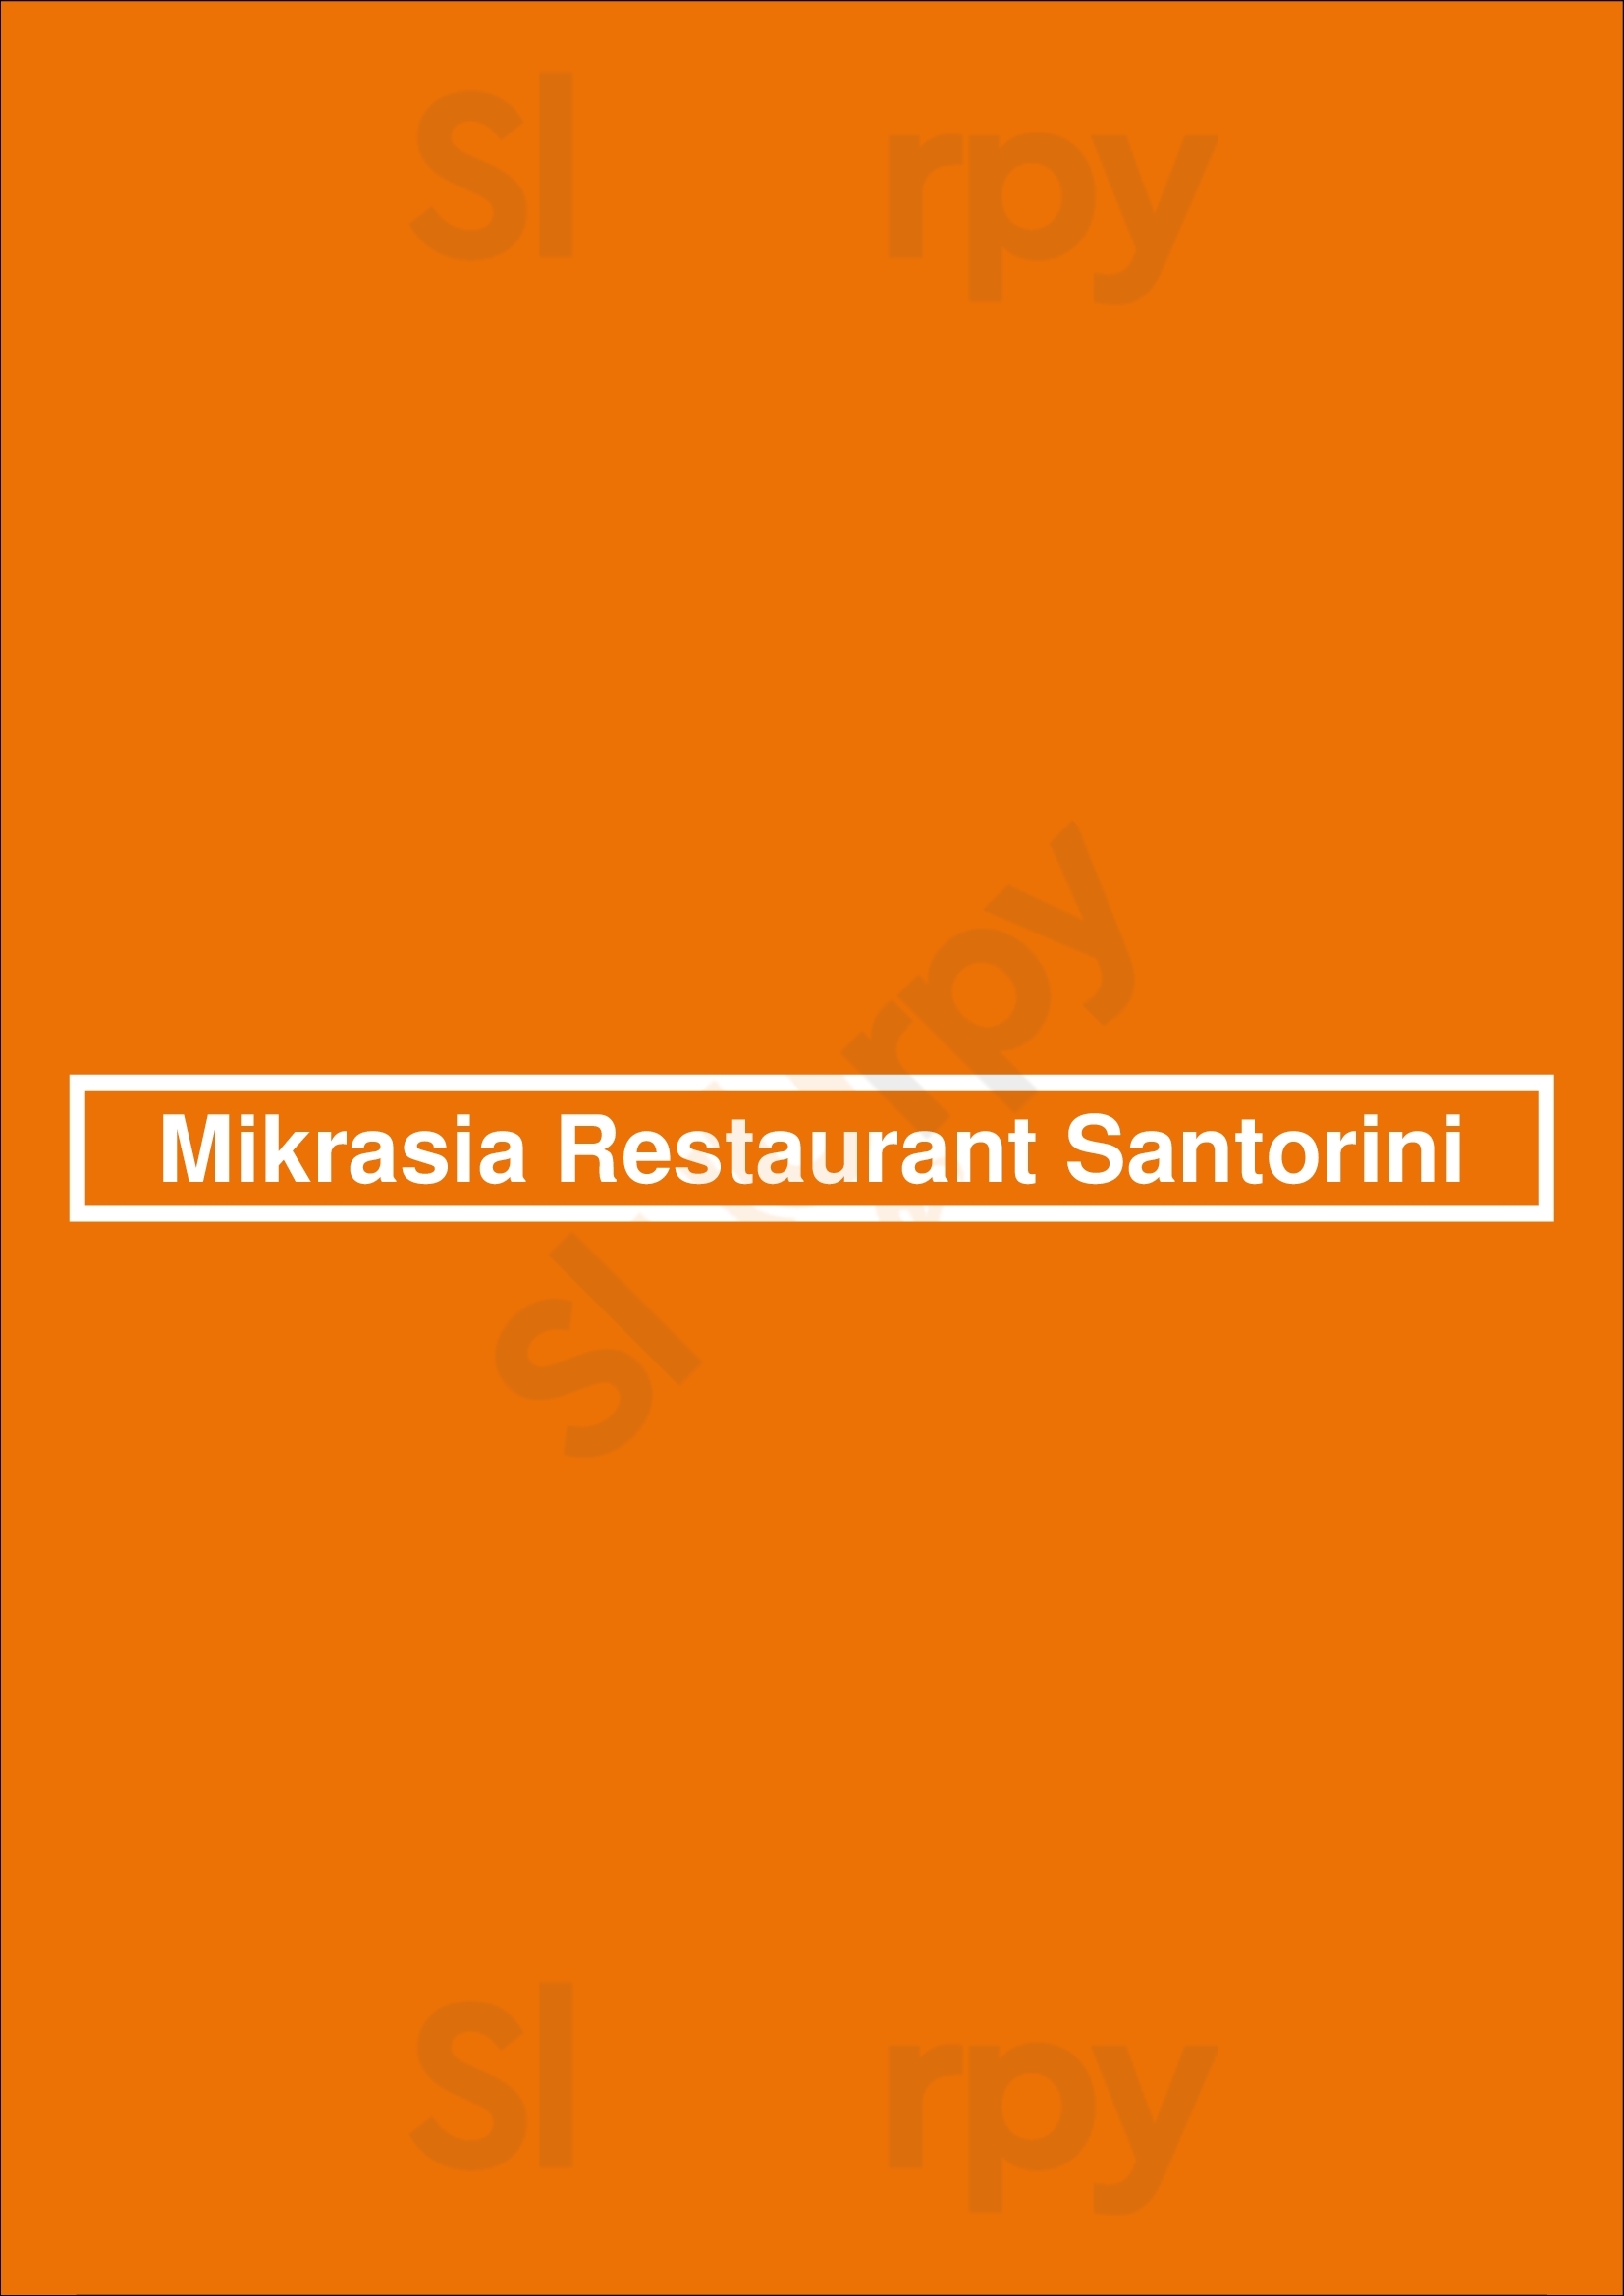 Mikrasia Restaurant Santorini Οία Menu - 1